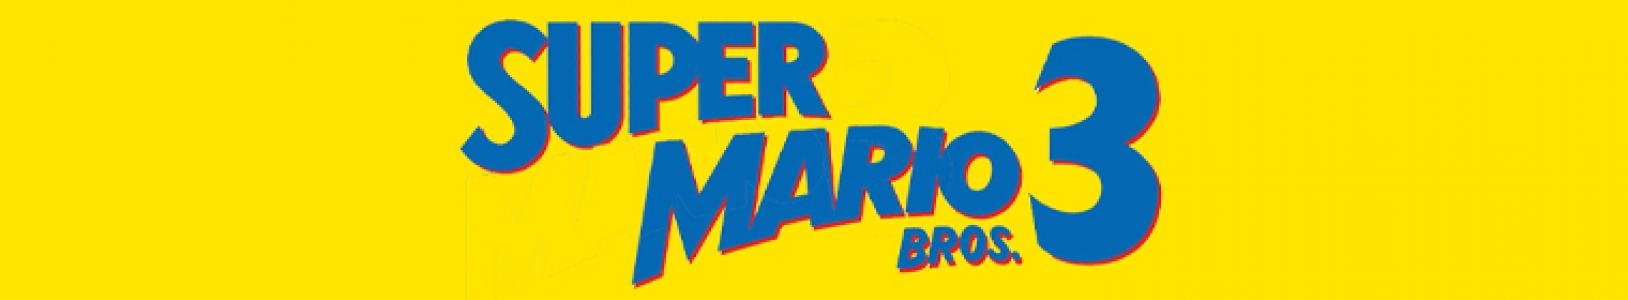 Super Mario Bros. 3 banner